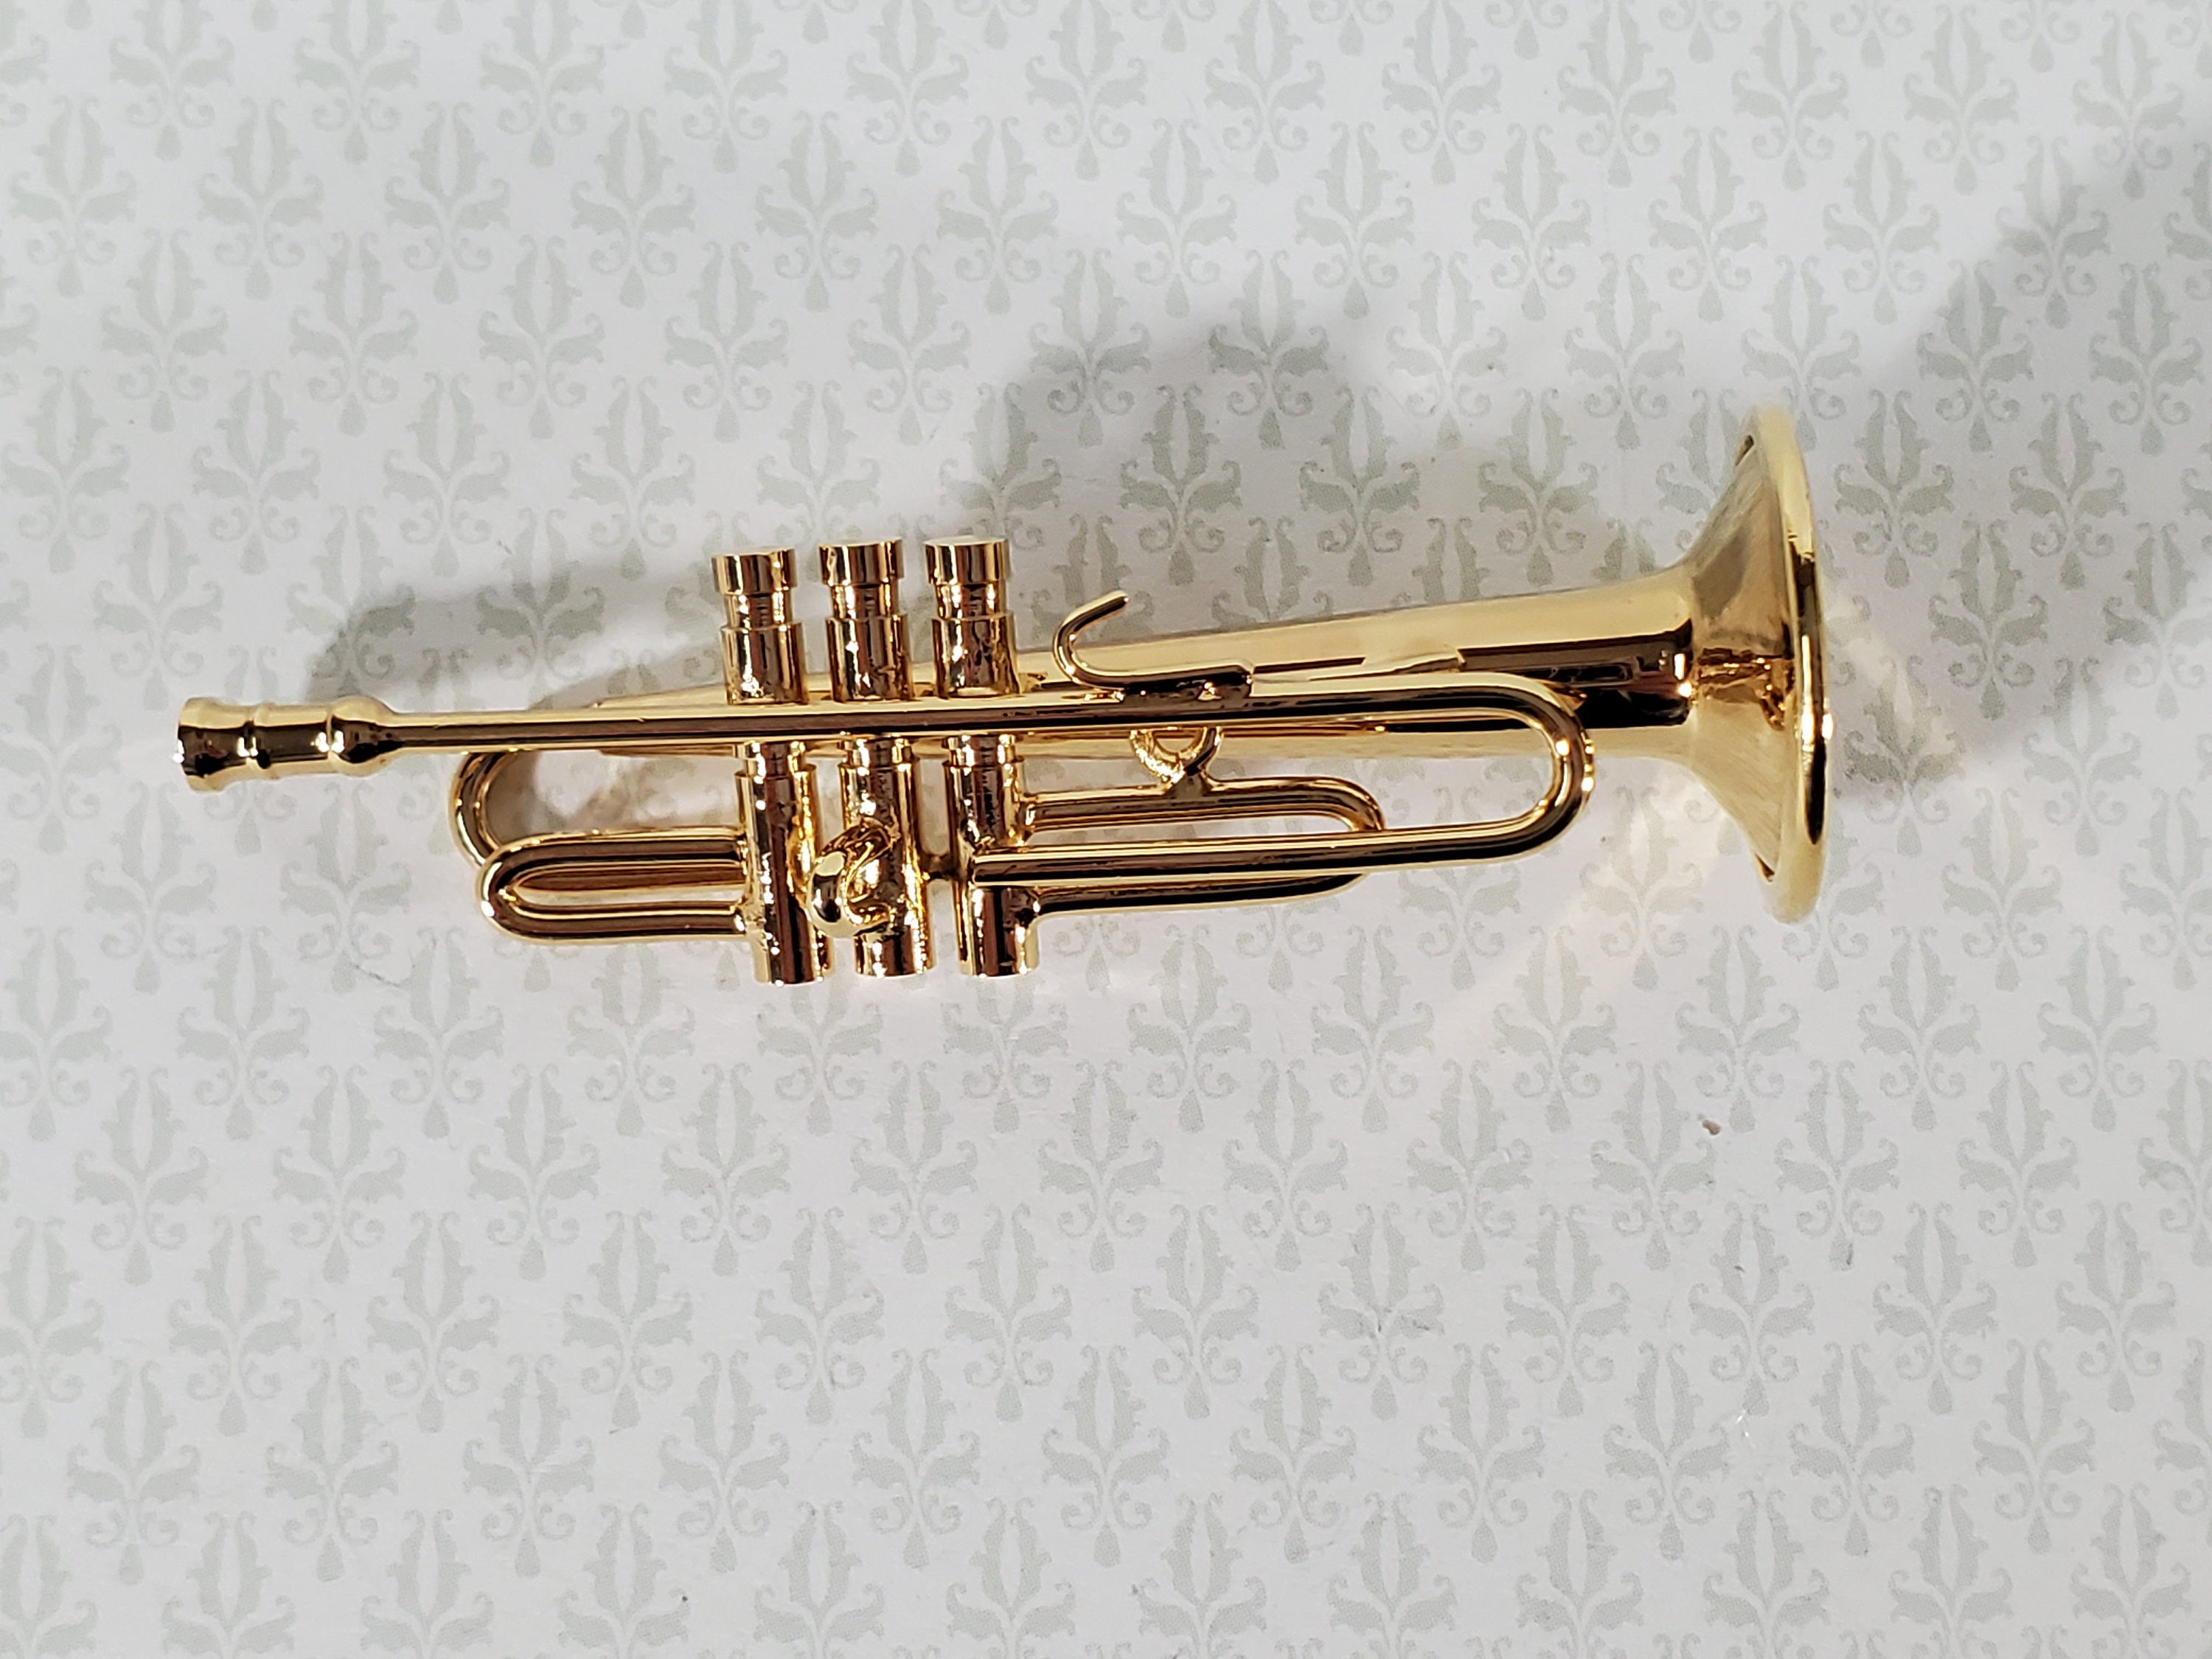 Miniature Trumpet Mini Trumpet Model High Simulation Mini Musical